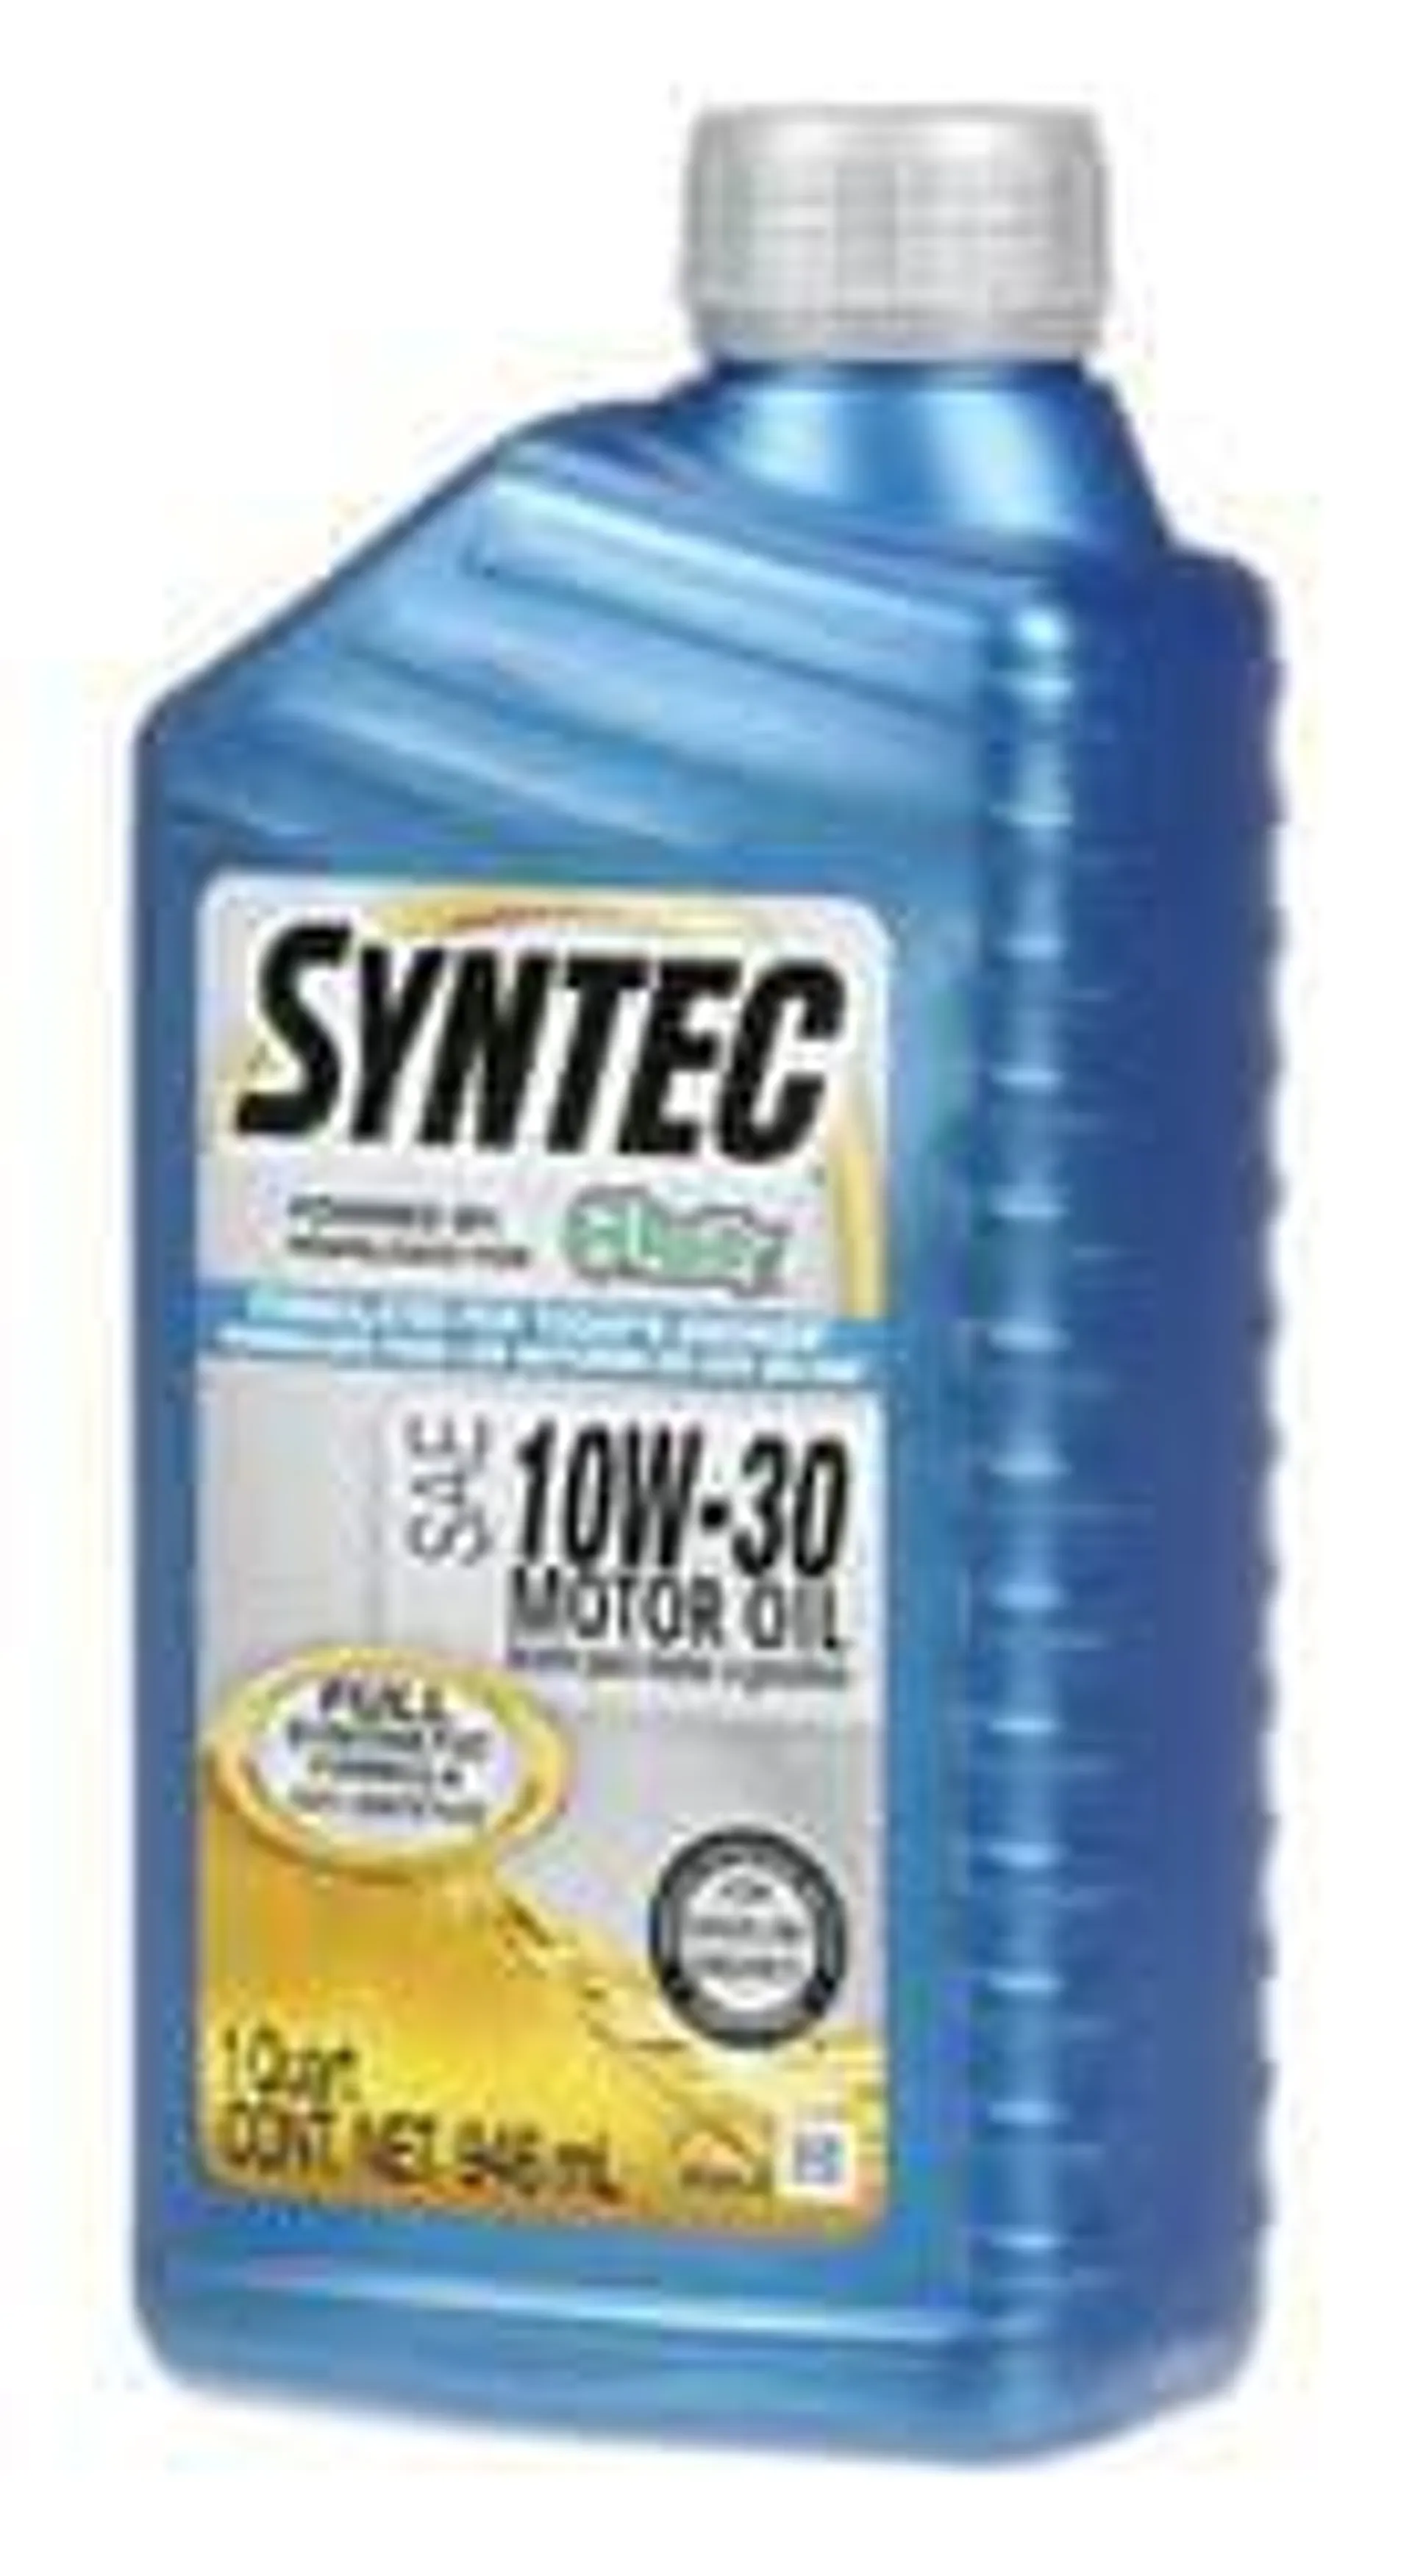 SYNTEC Full Synthetic Motor Oil 10W-30 1 Quart - SYN10-30